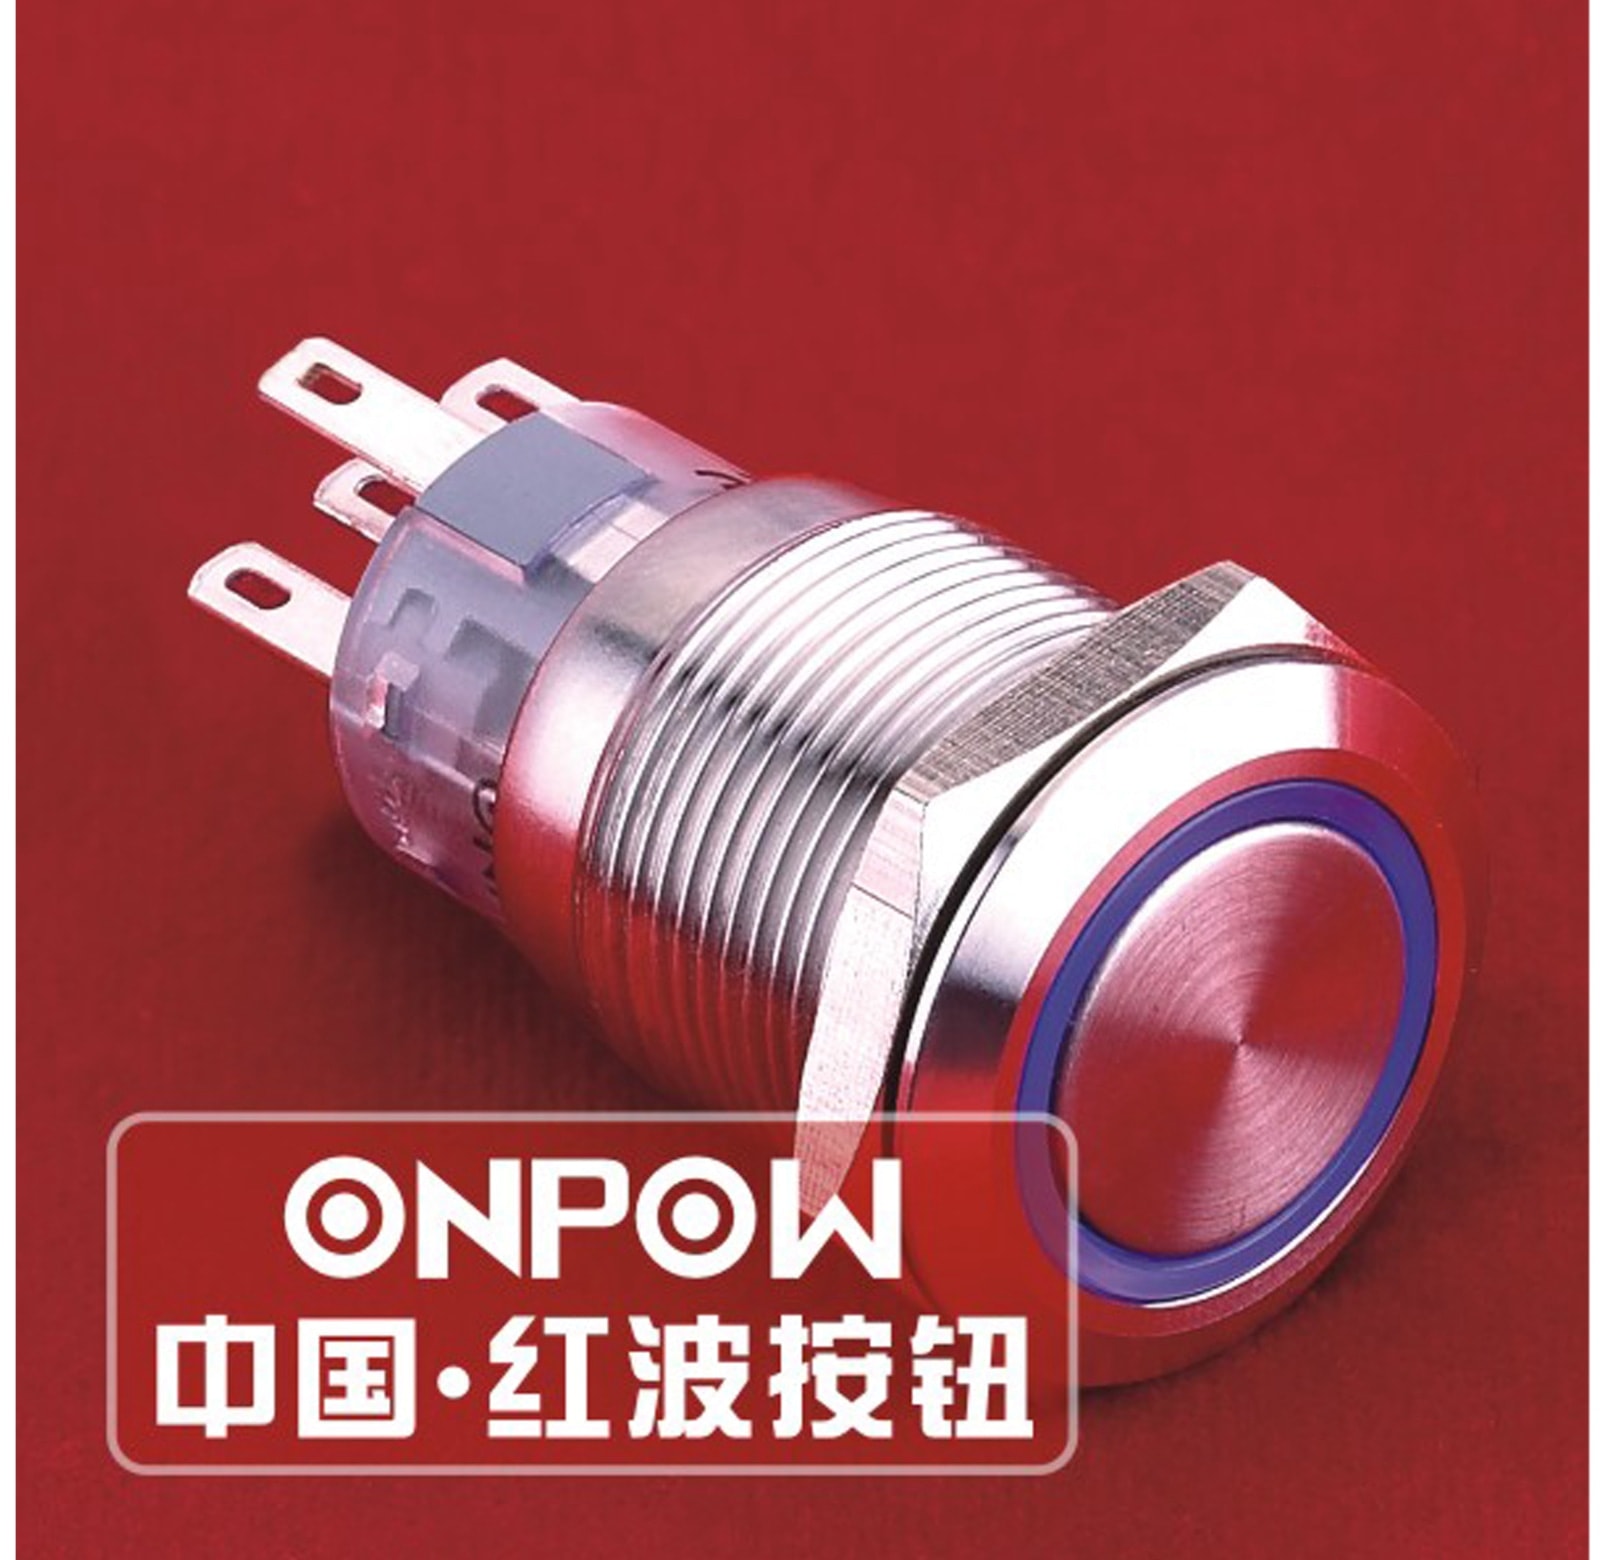 ONPOW Schalter, 24 V/DC, 1x Off/(On), Beleuchtung grün, Lötanschluss, flach rund, Edelstahl, 19 mm